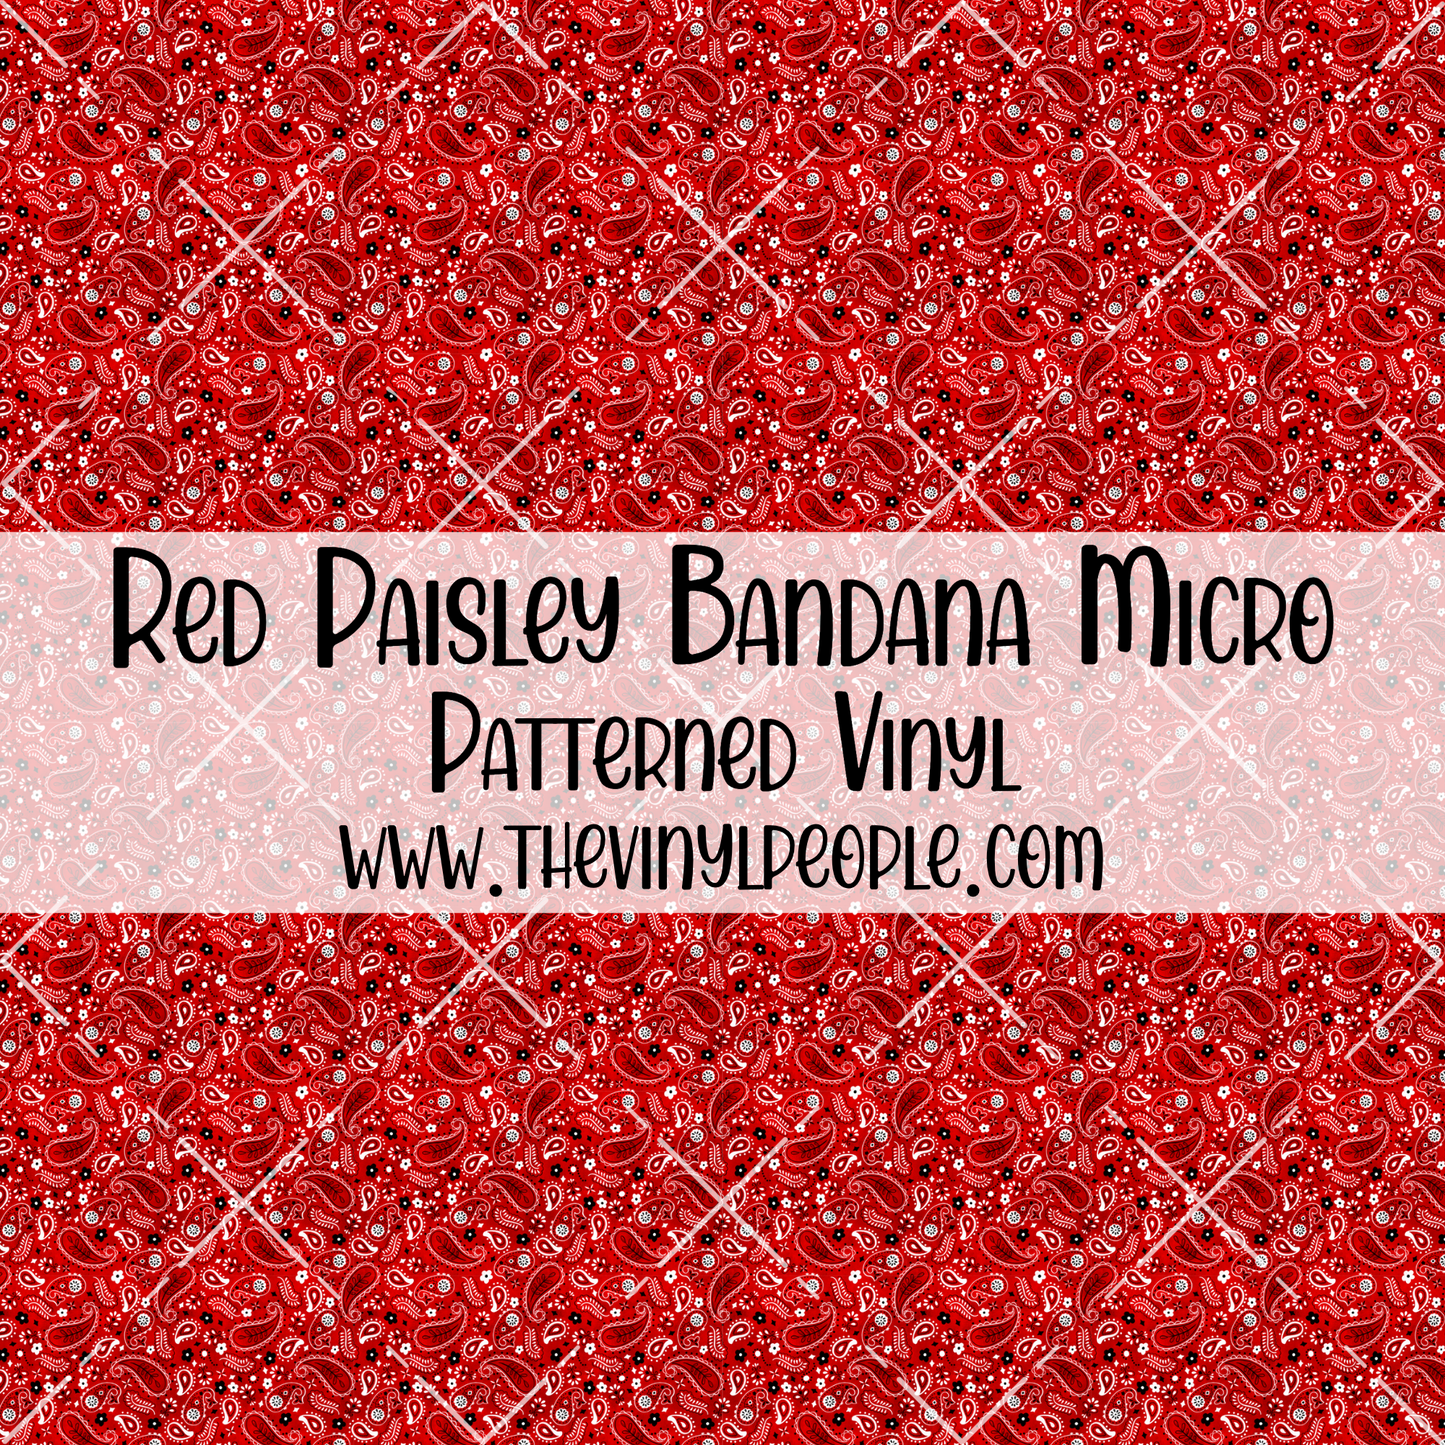 Red Paisley Bandana Patterned Vinyl